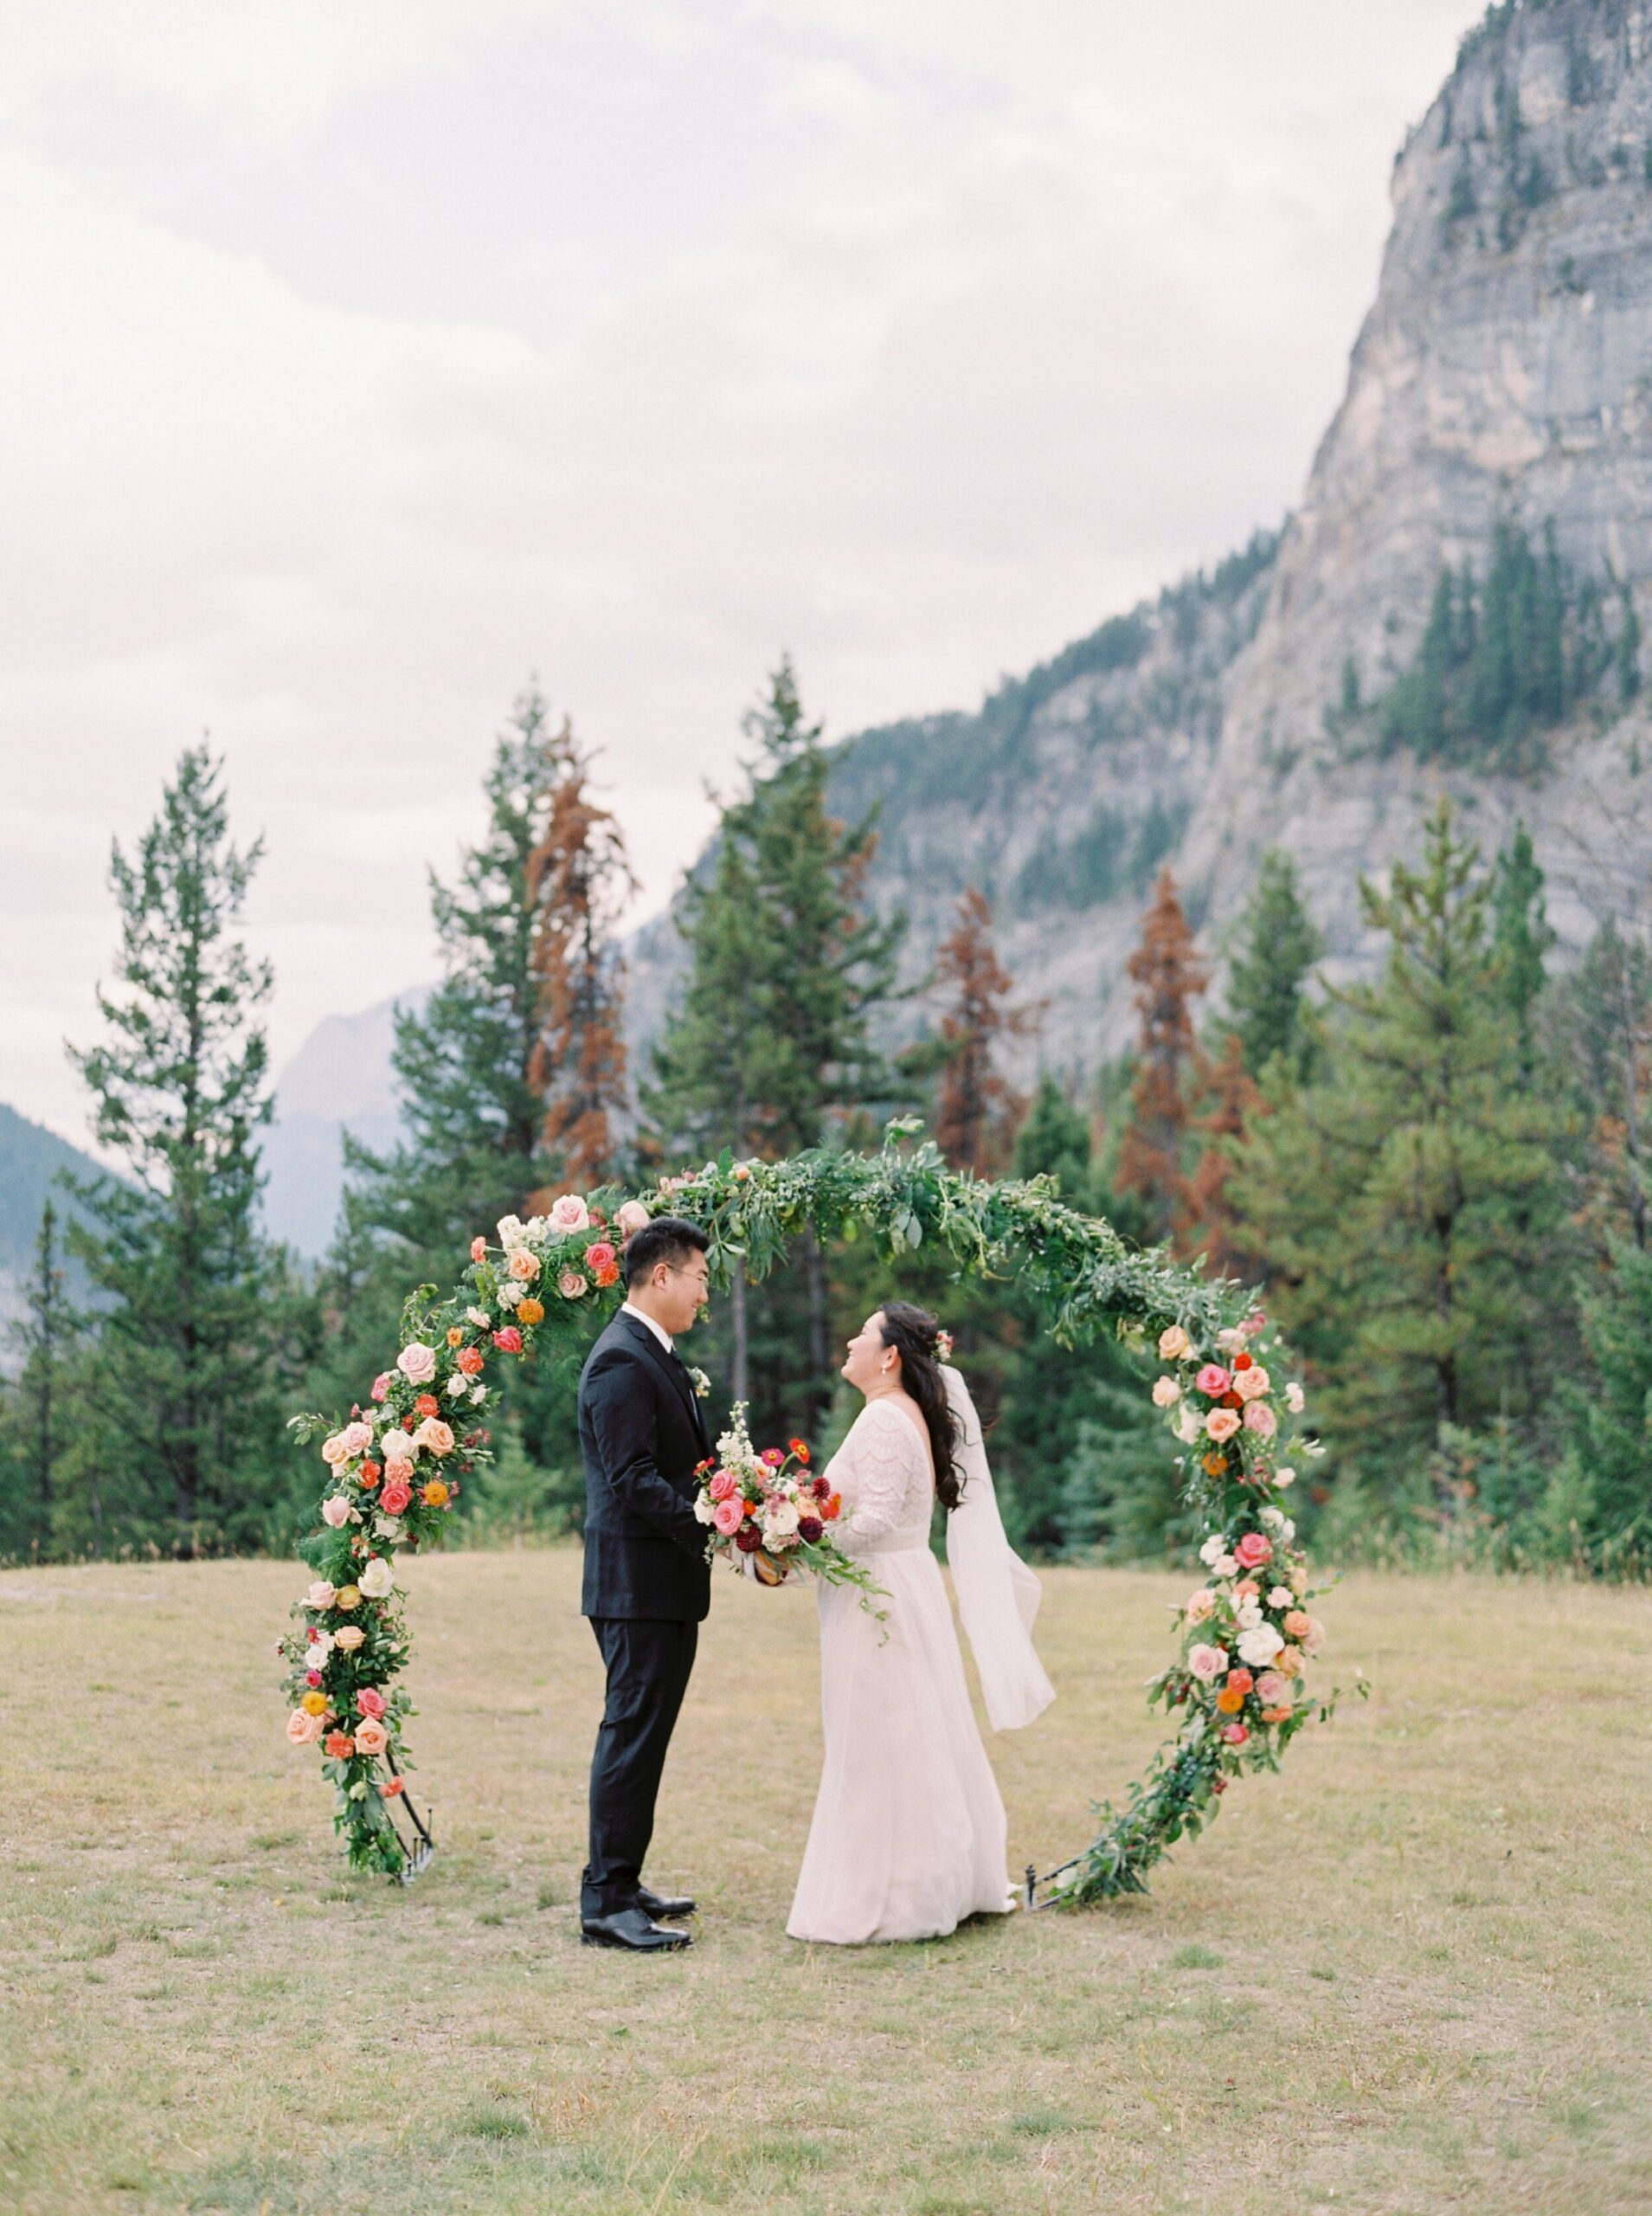  Banff wedding photographers | Justine milton photography | fine art film destination wedding photographer | Banff elopement floral arch ceremony decor 